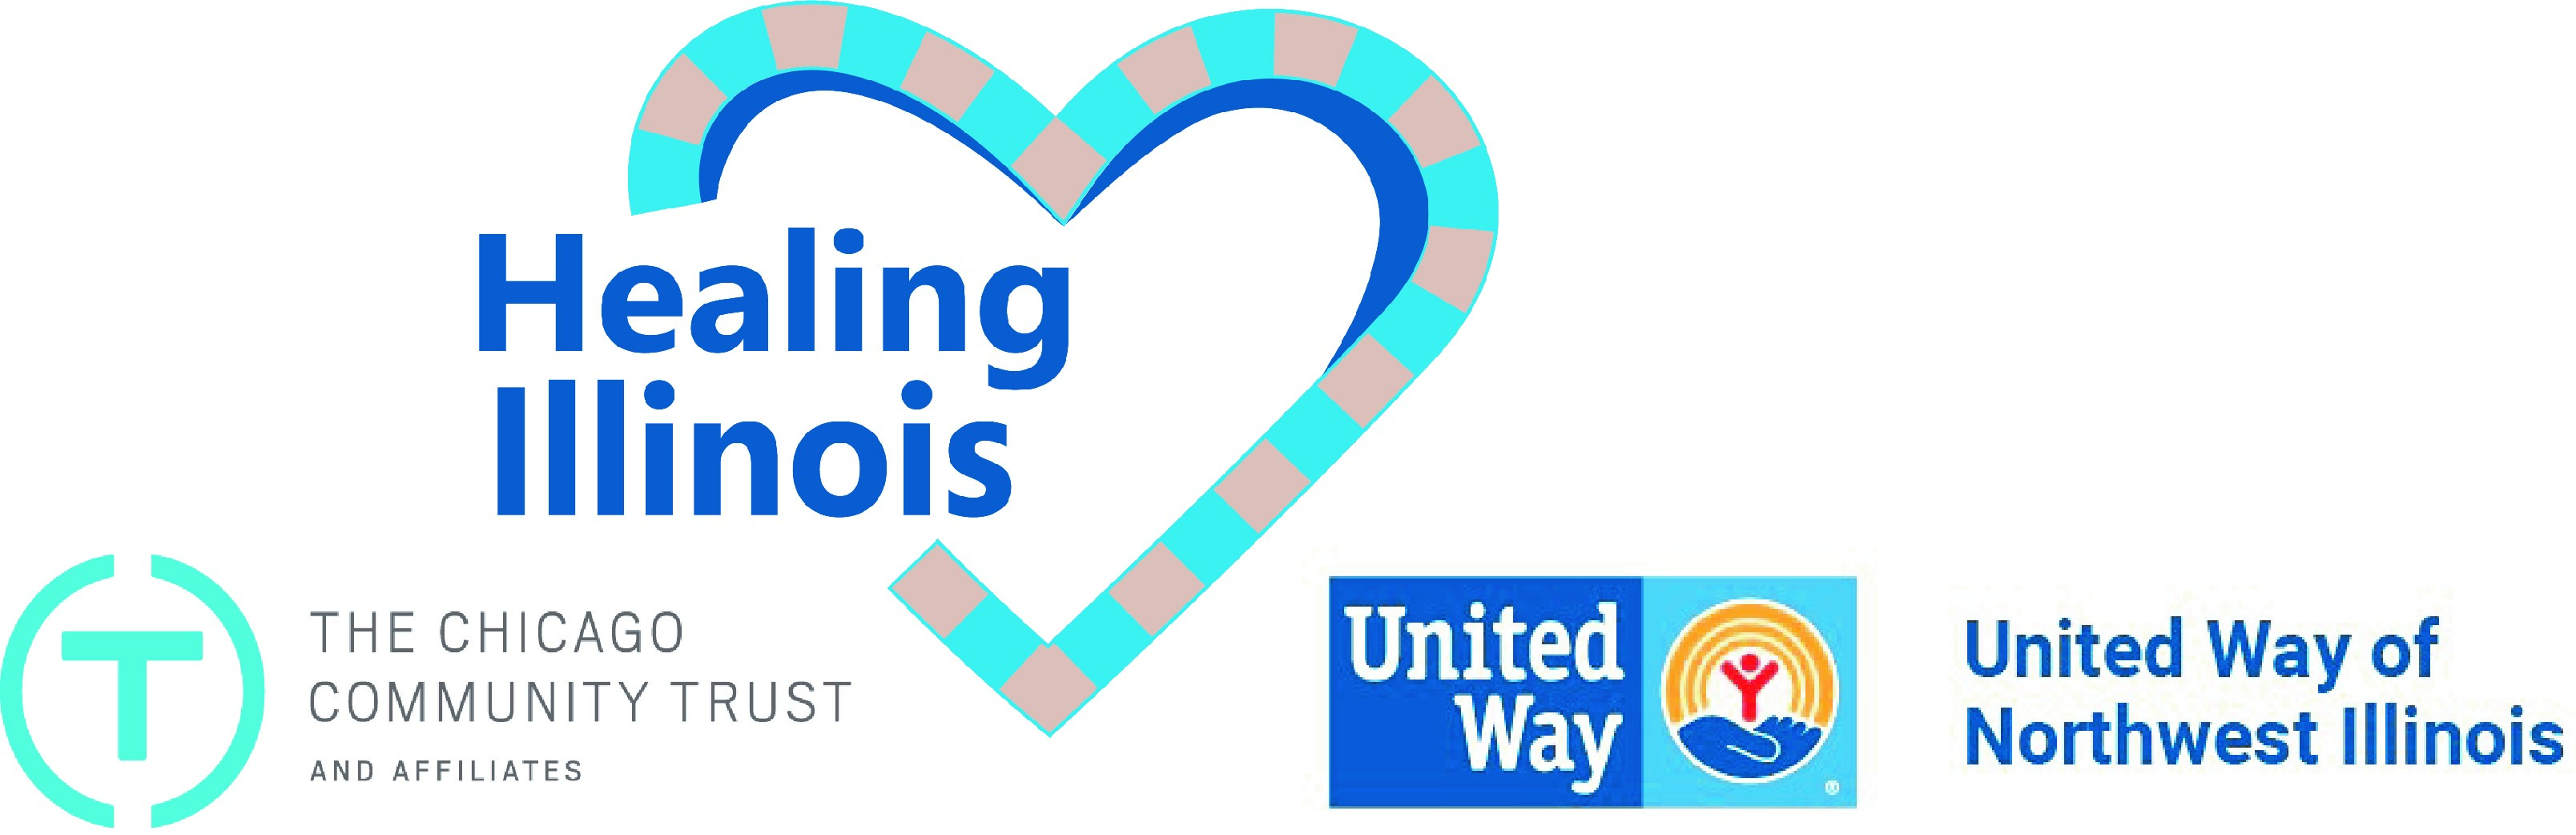 Healing Illinois with the Chicago Community Trust and united way of northwest illinois